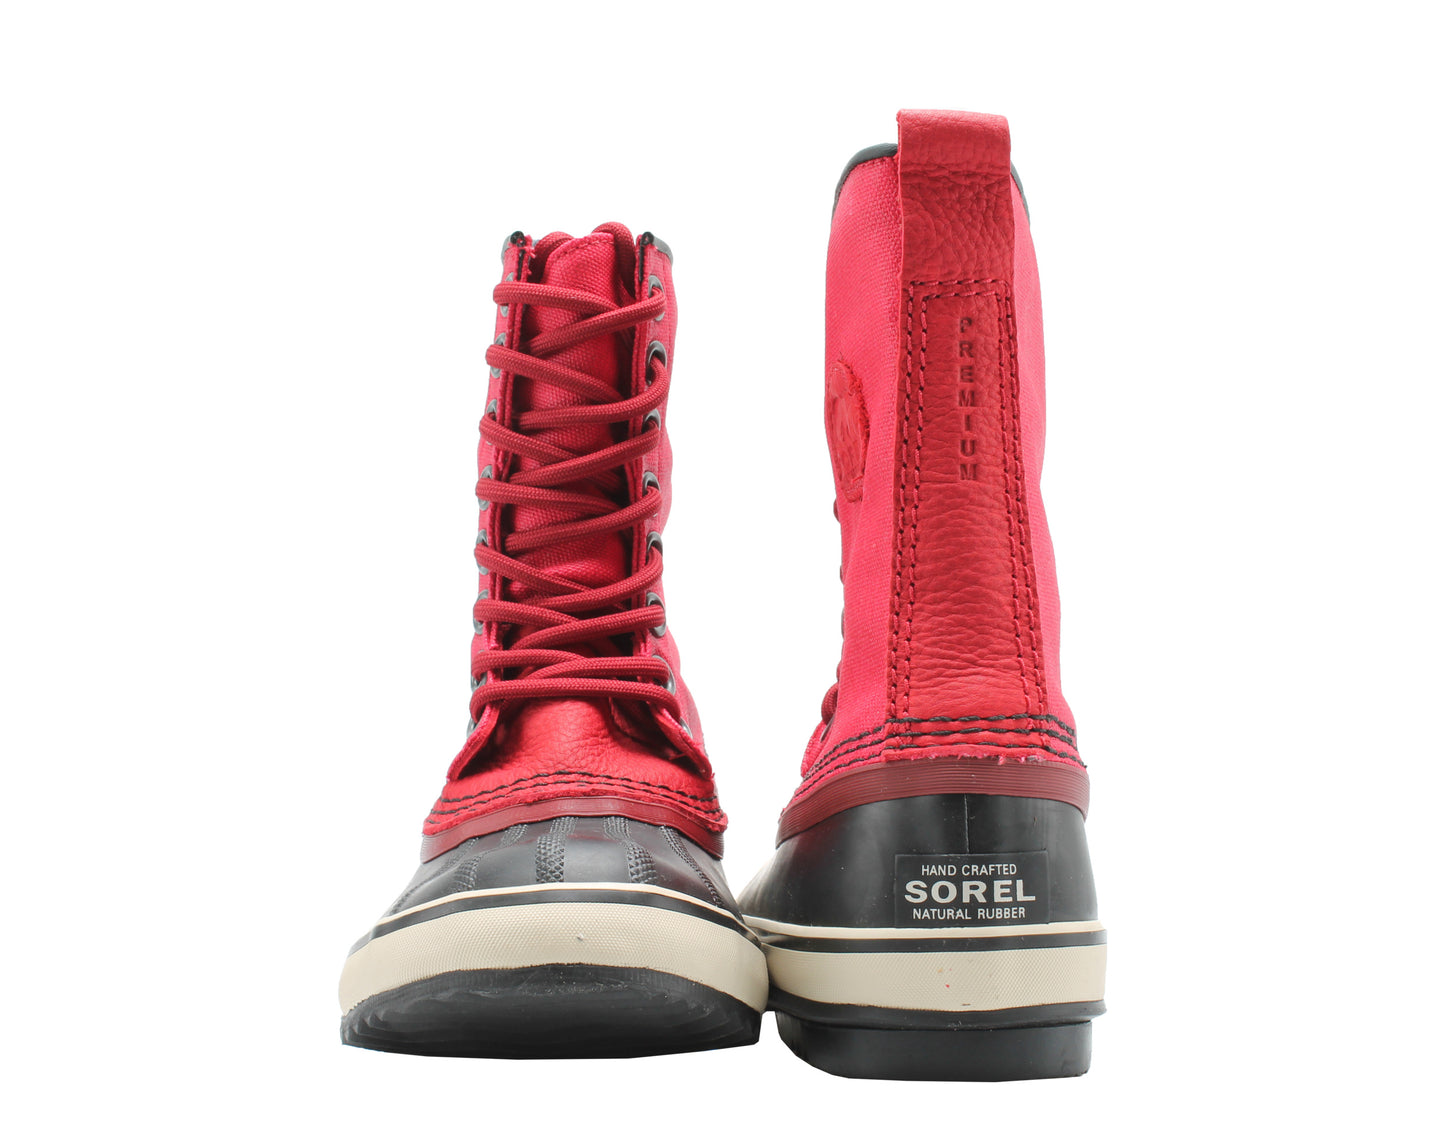 Sorel 1964 Premium CVS Women's Boots